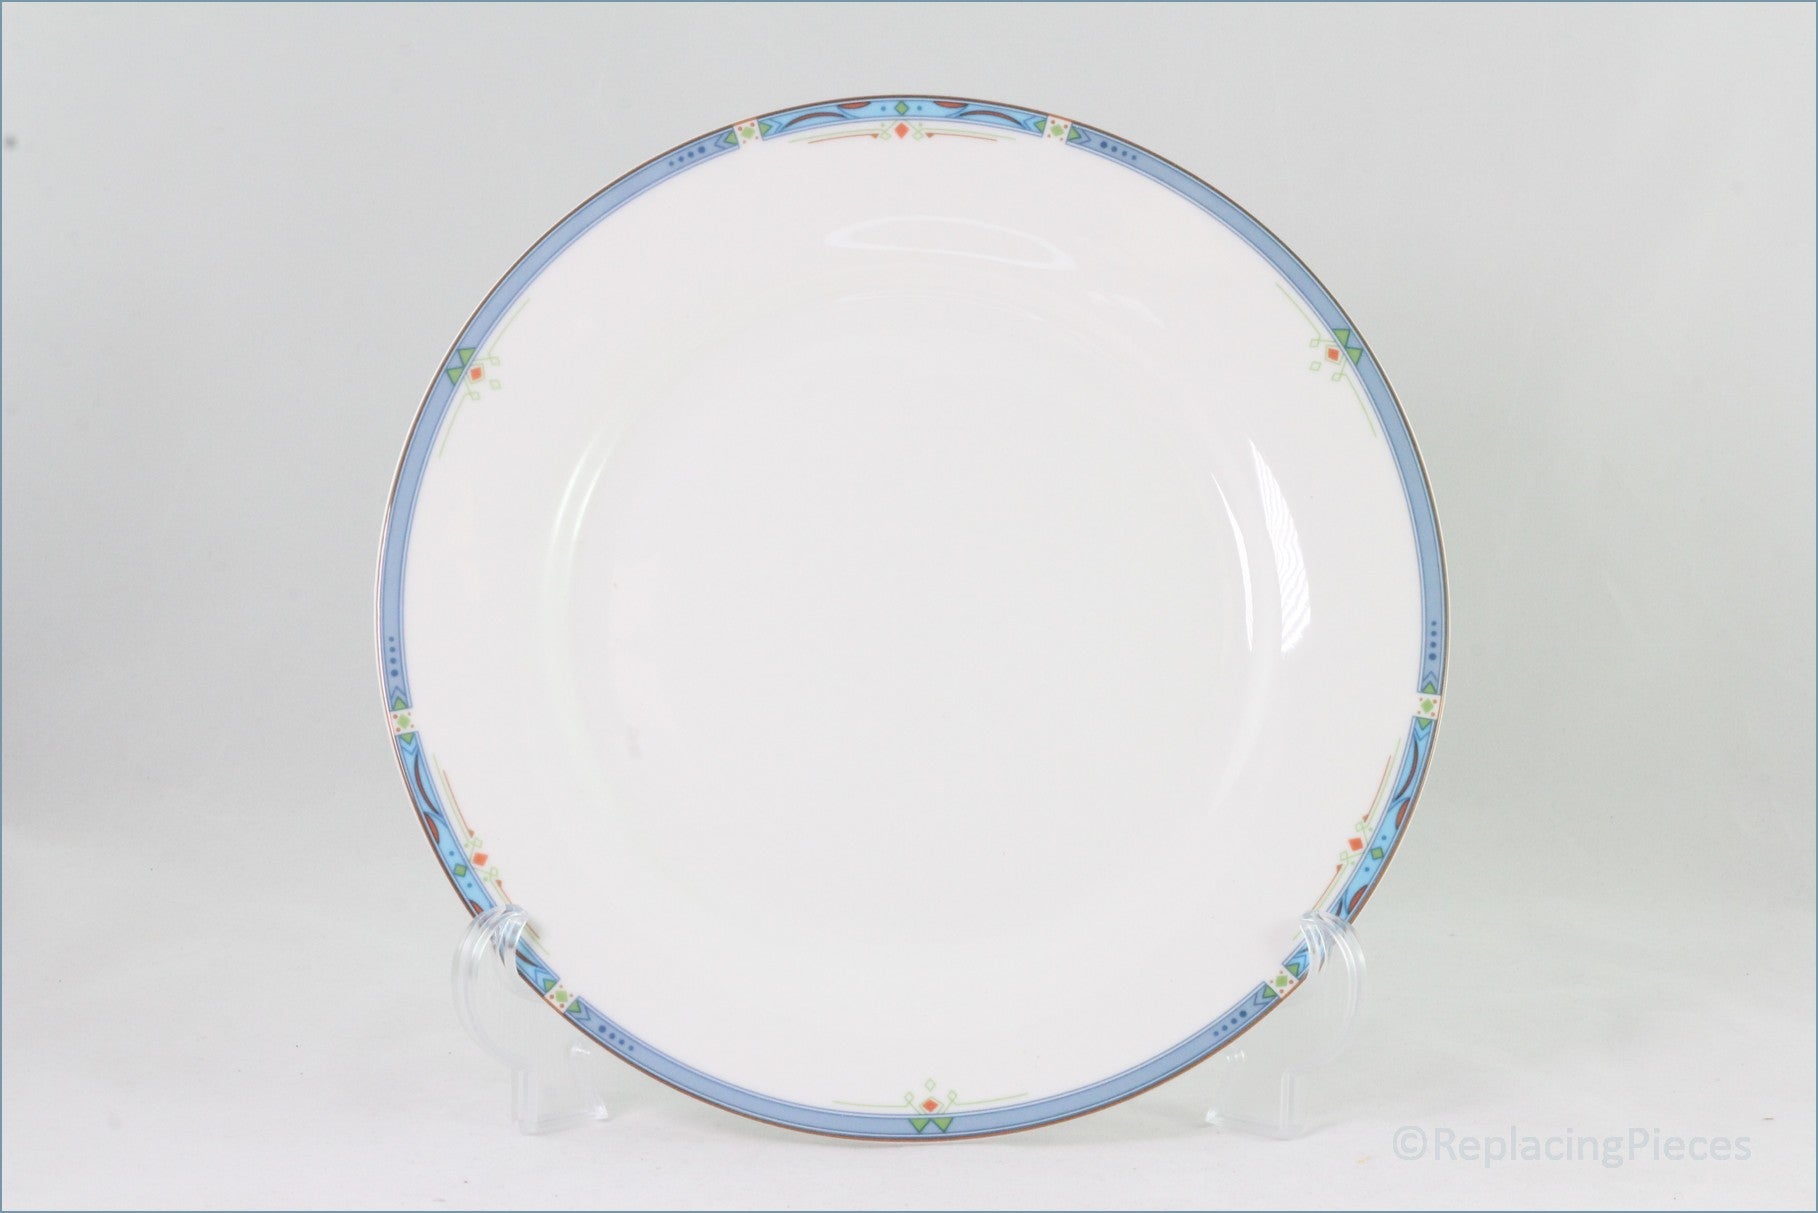 Royal Doulton - Blue Trend - Dinner Plate